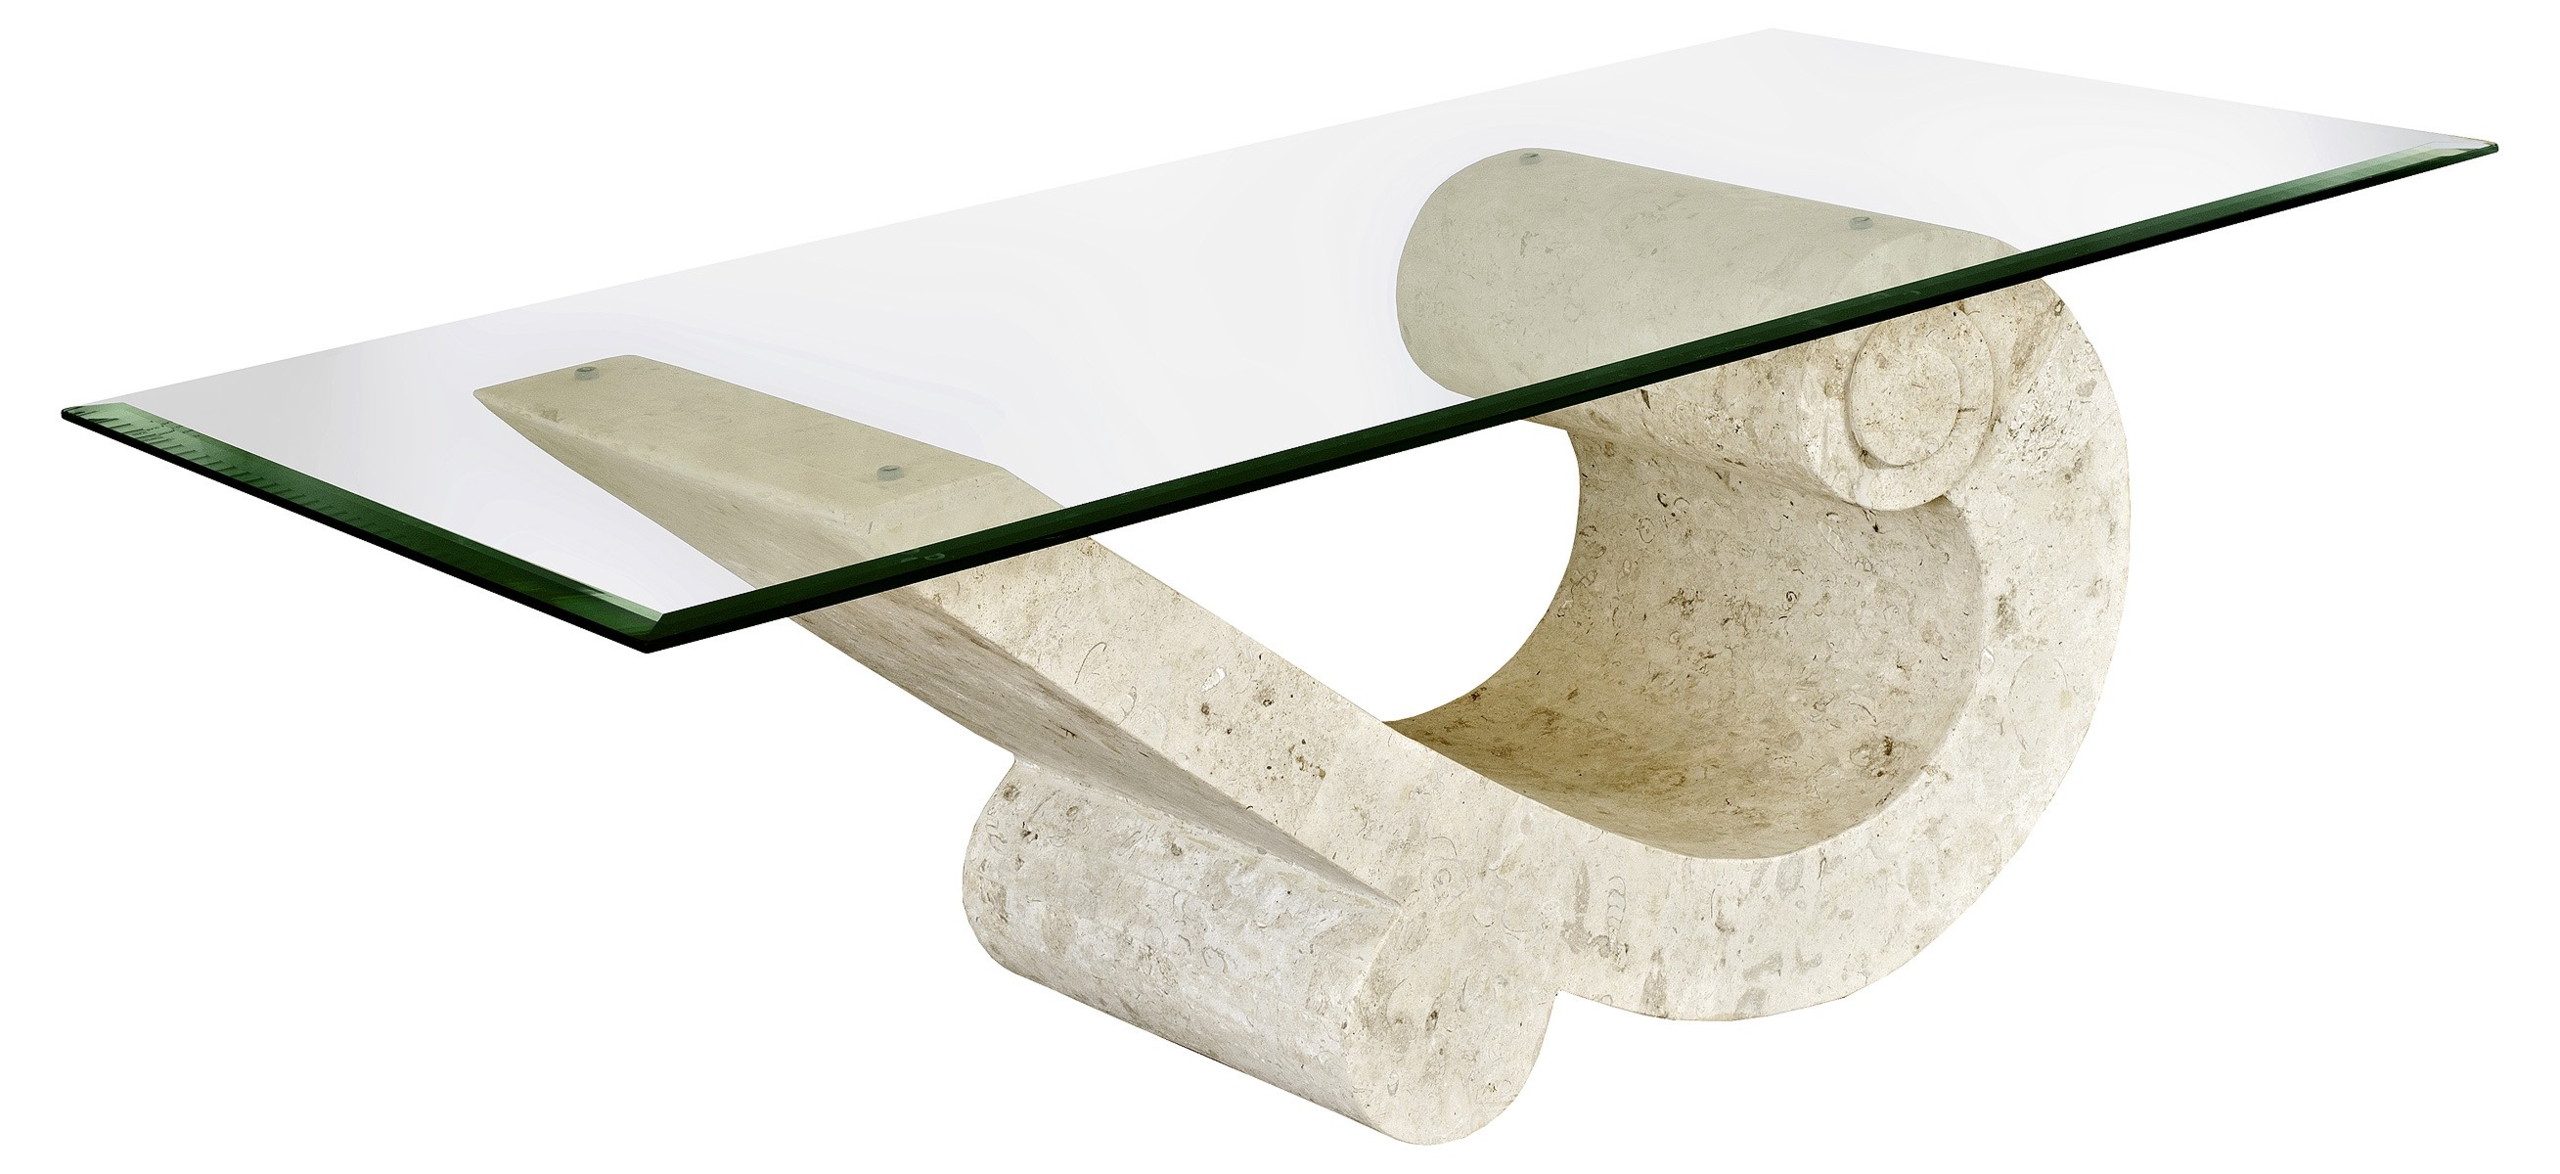 Sea crest mactan stone coffee table